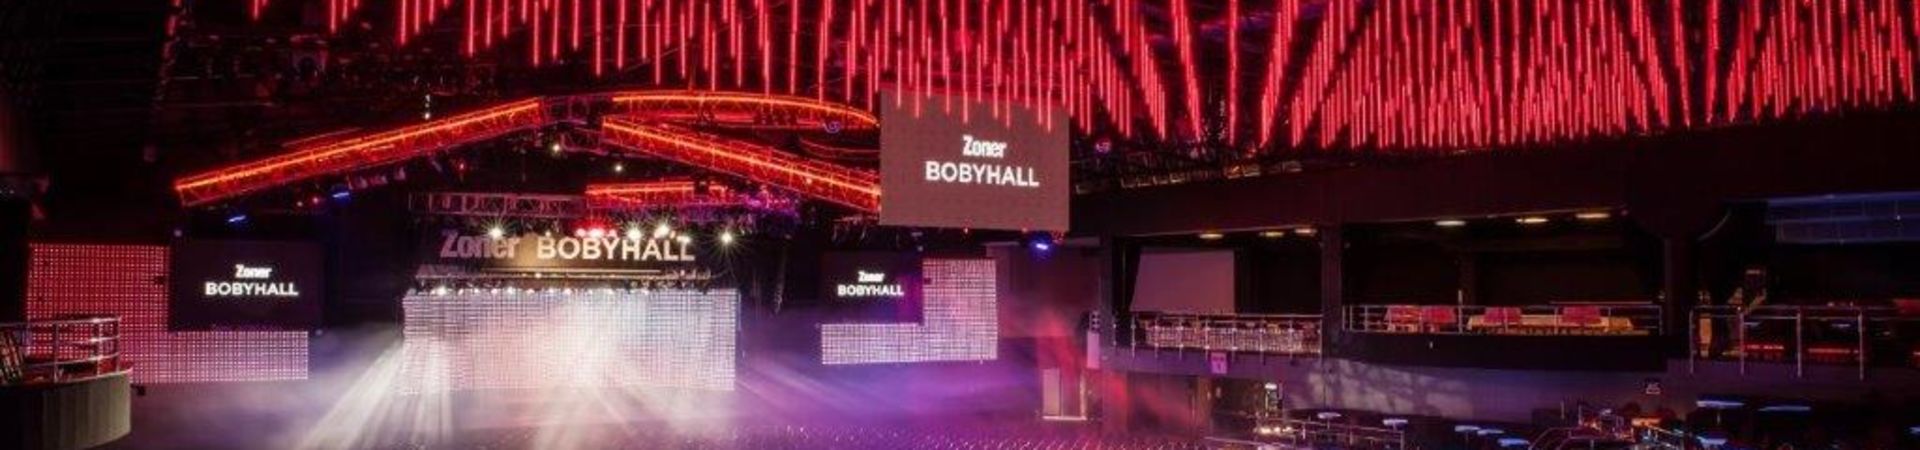 Hotel Cosmopolitan Bobycentrum - Zoner Bobyhall